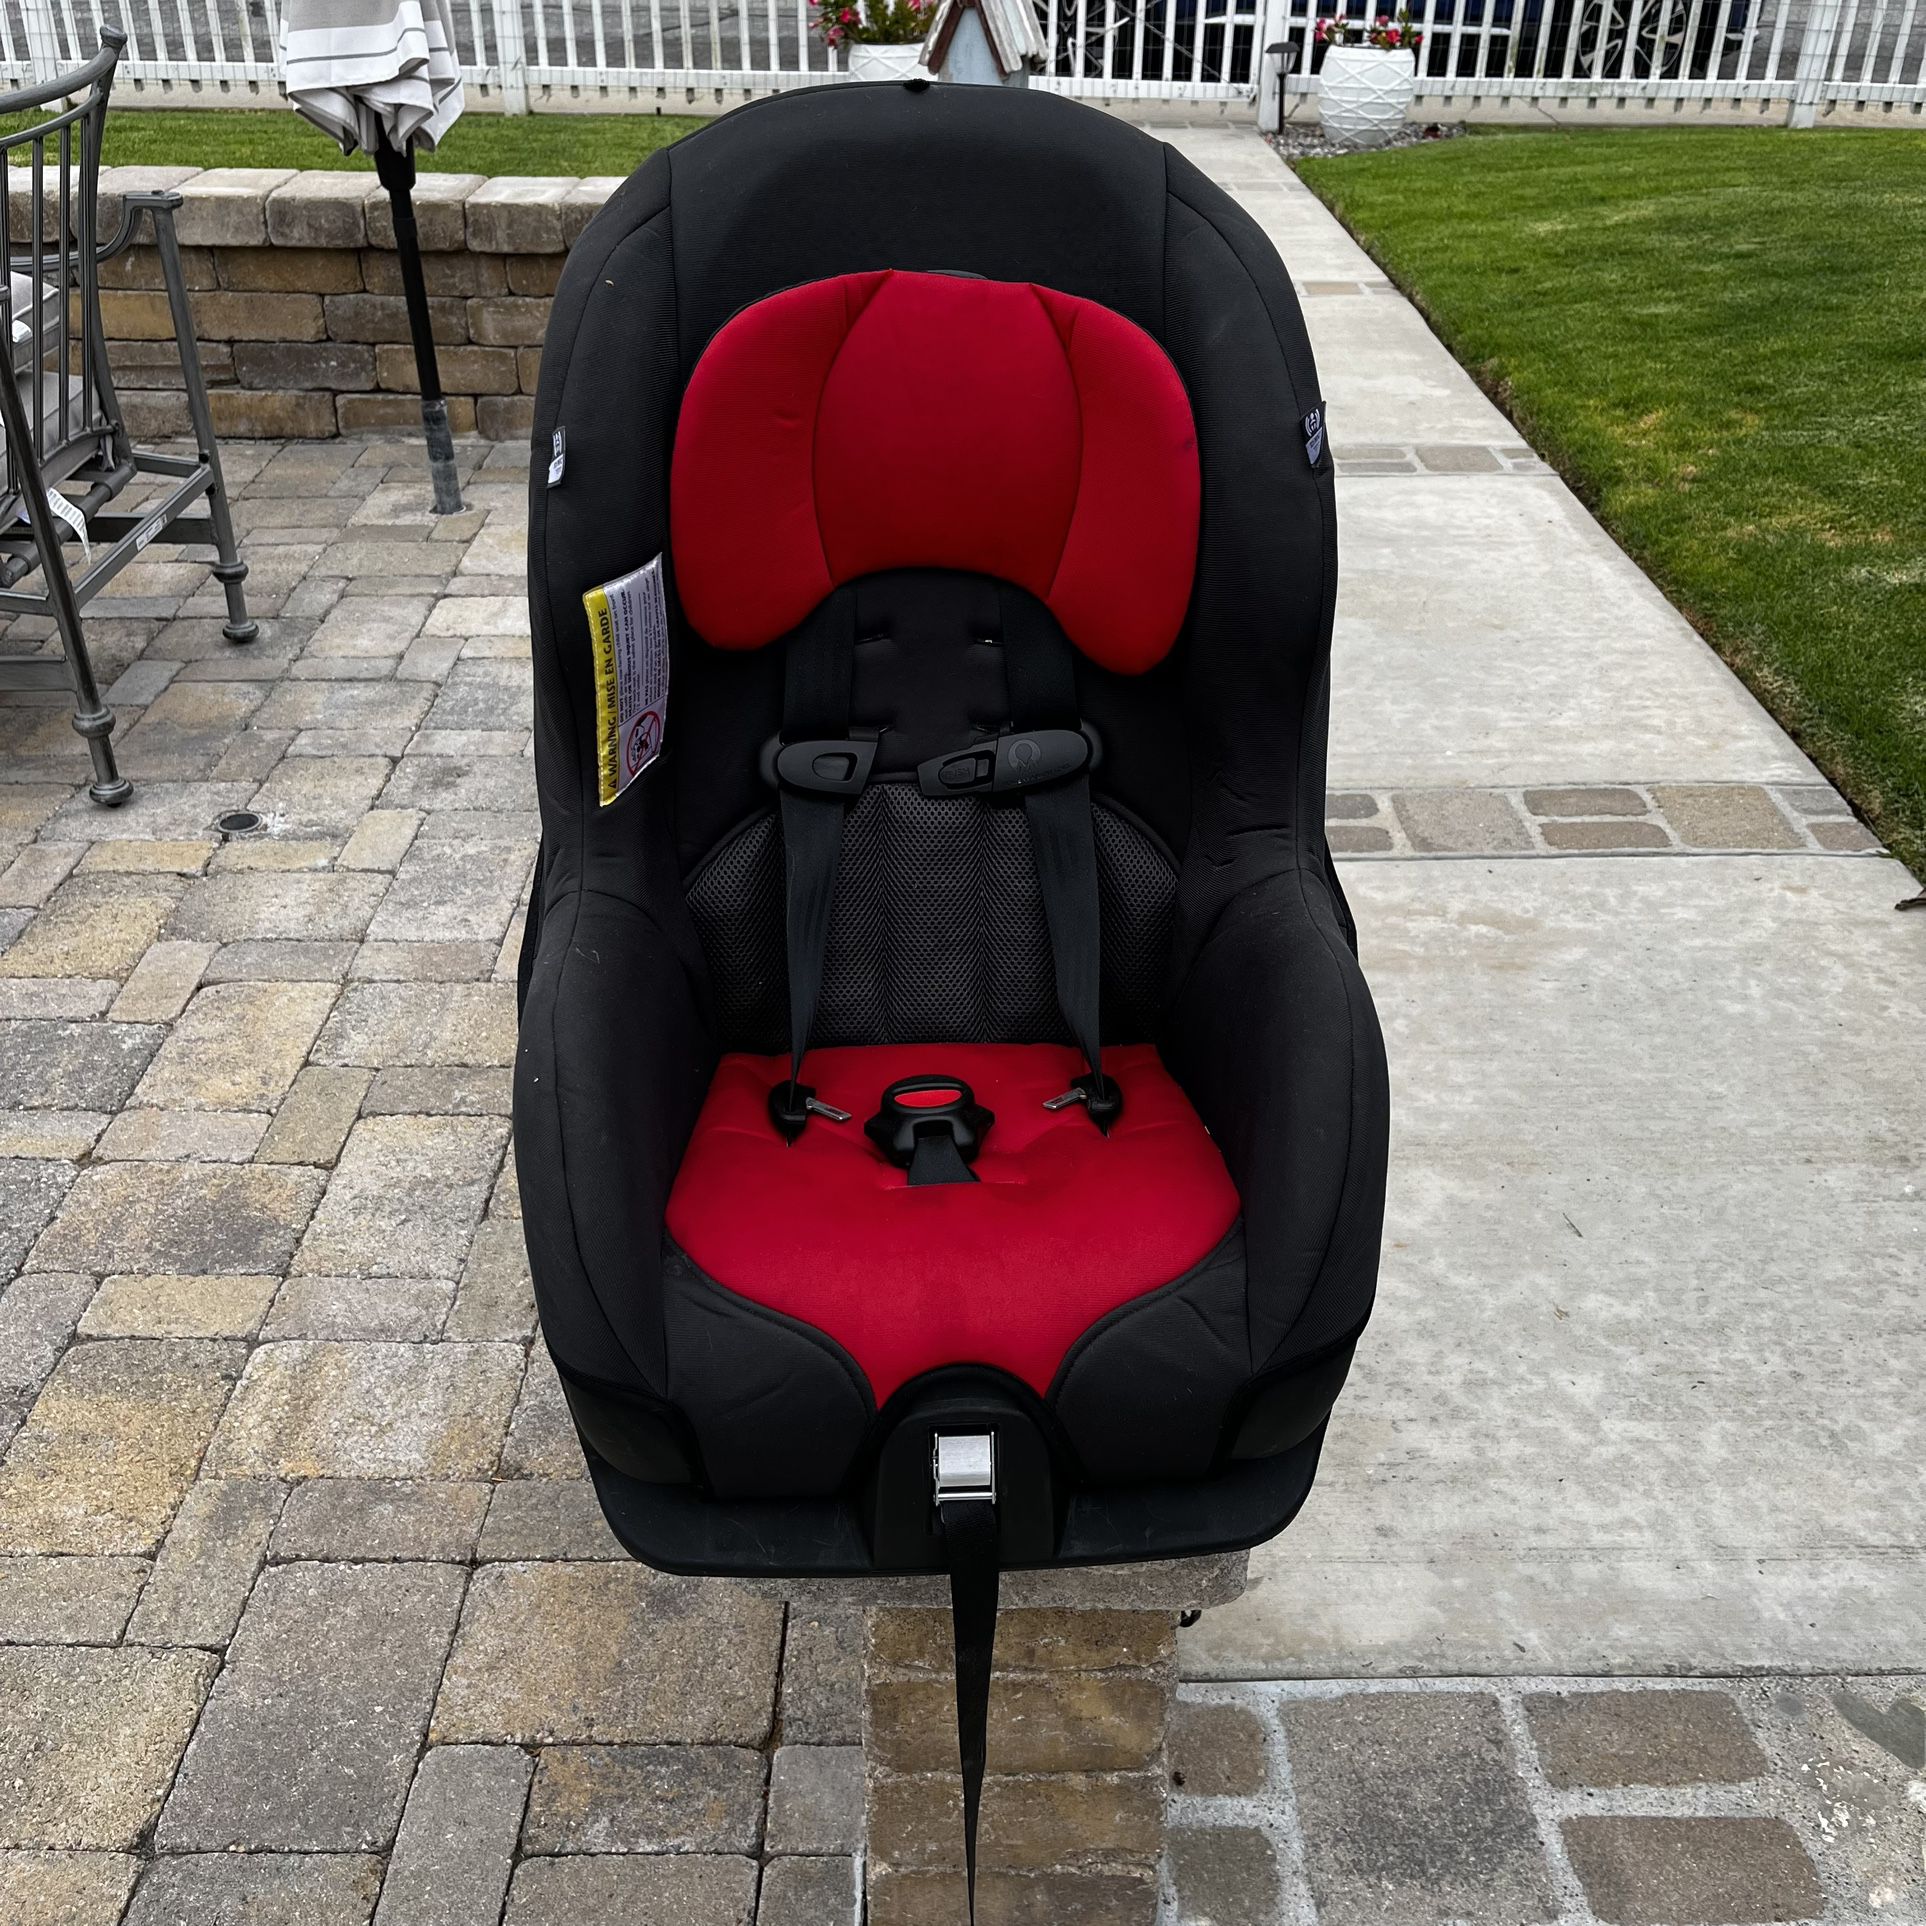 EVENFLO Baby Car Seat 